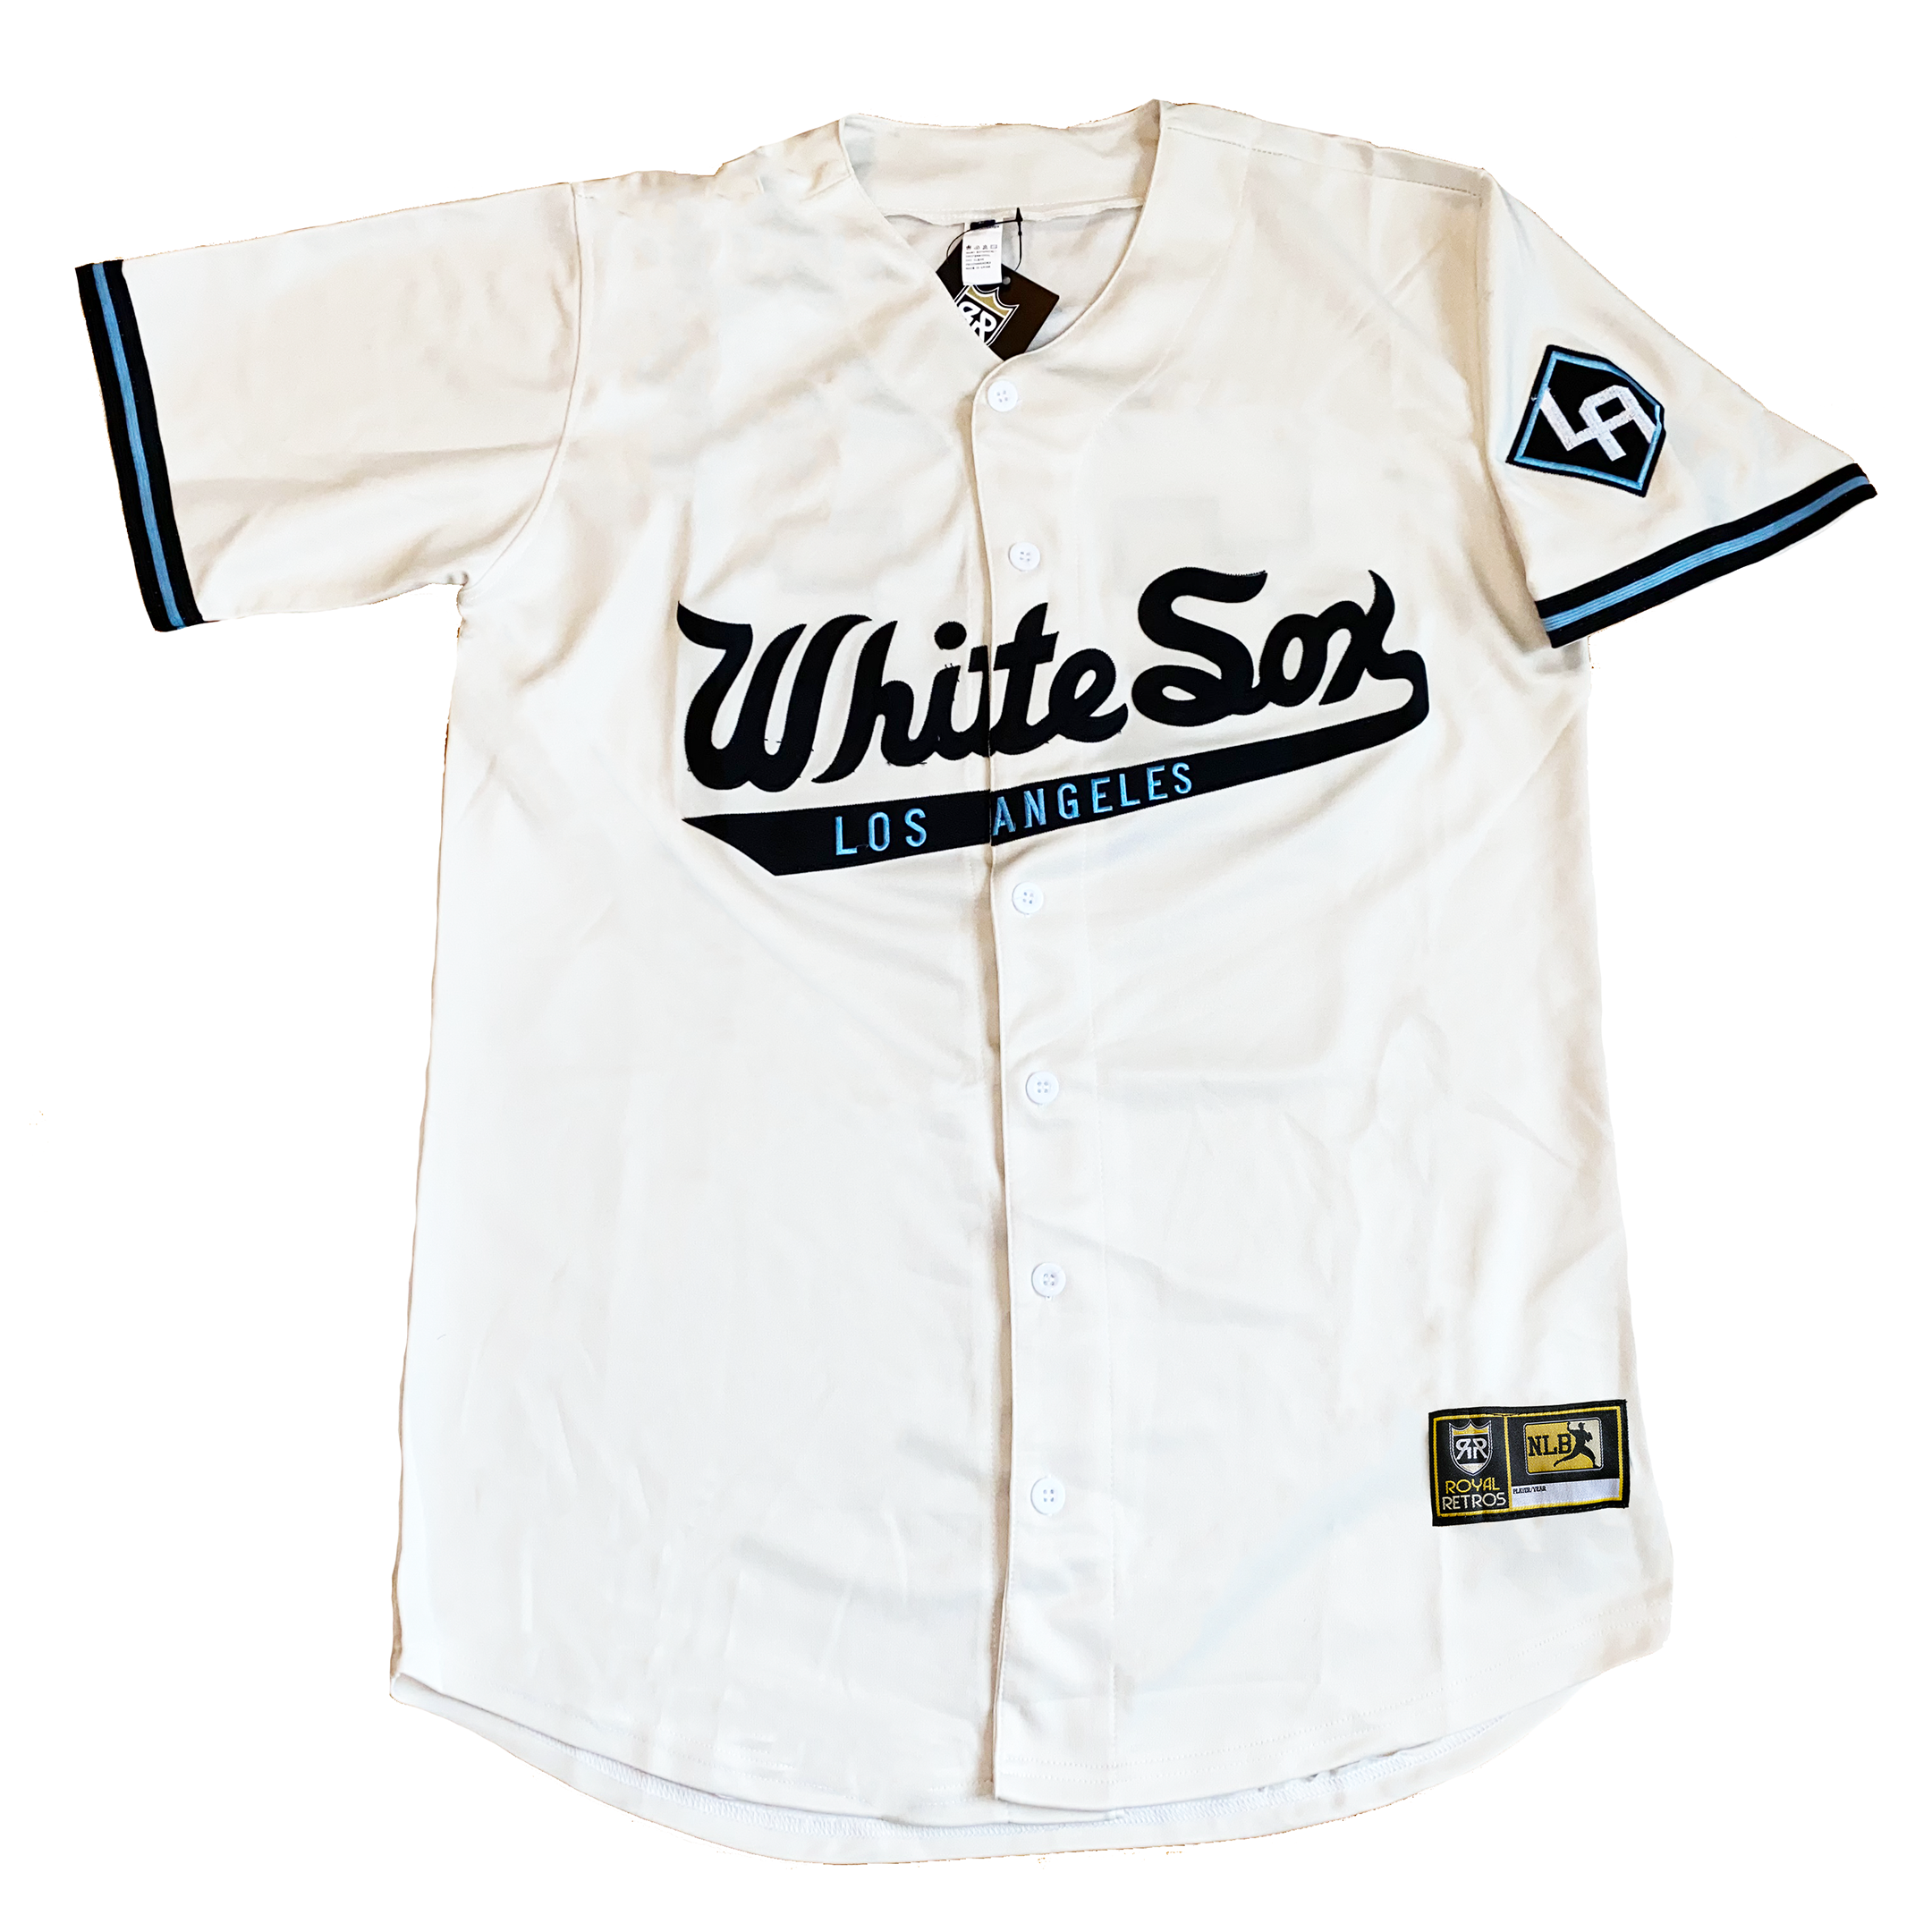 white sox vintage jersey